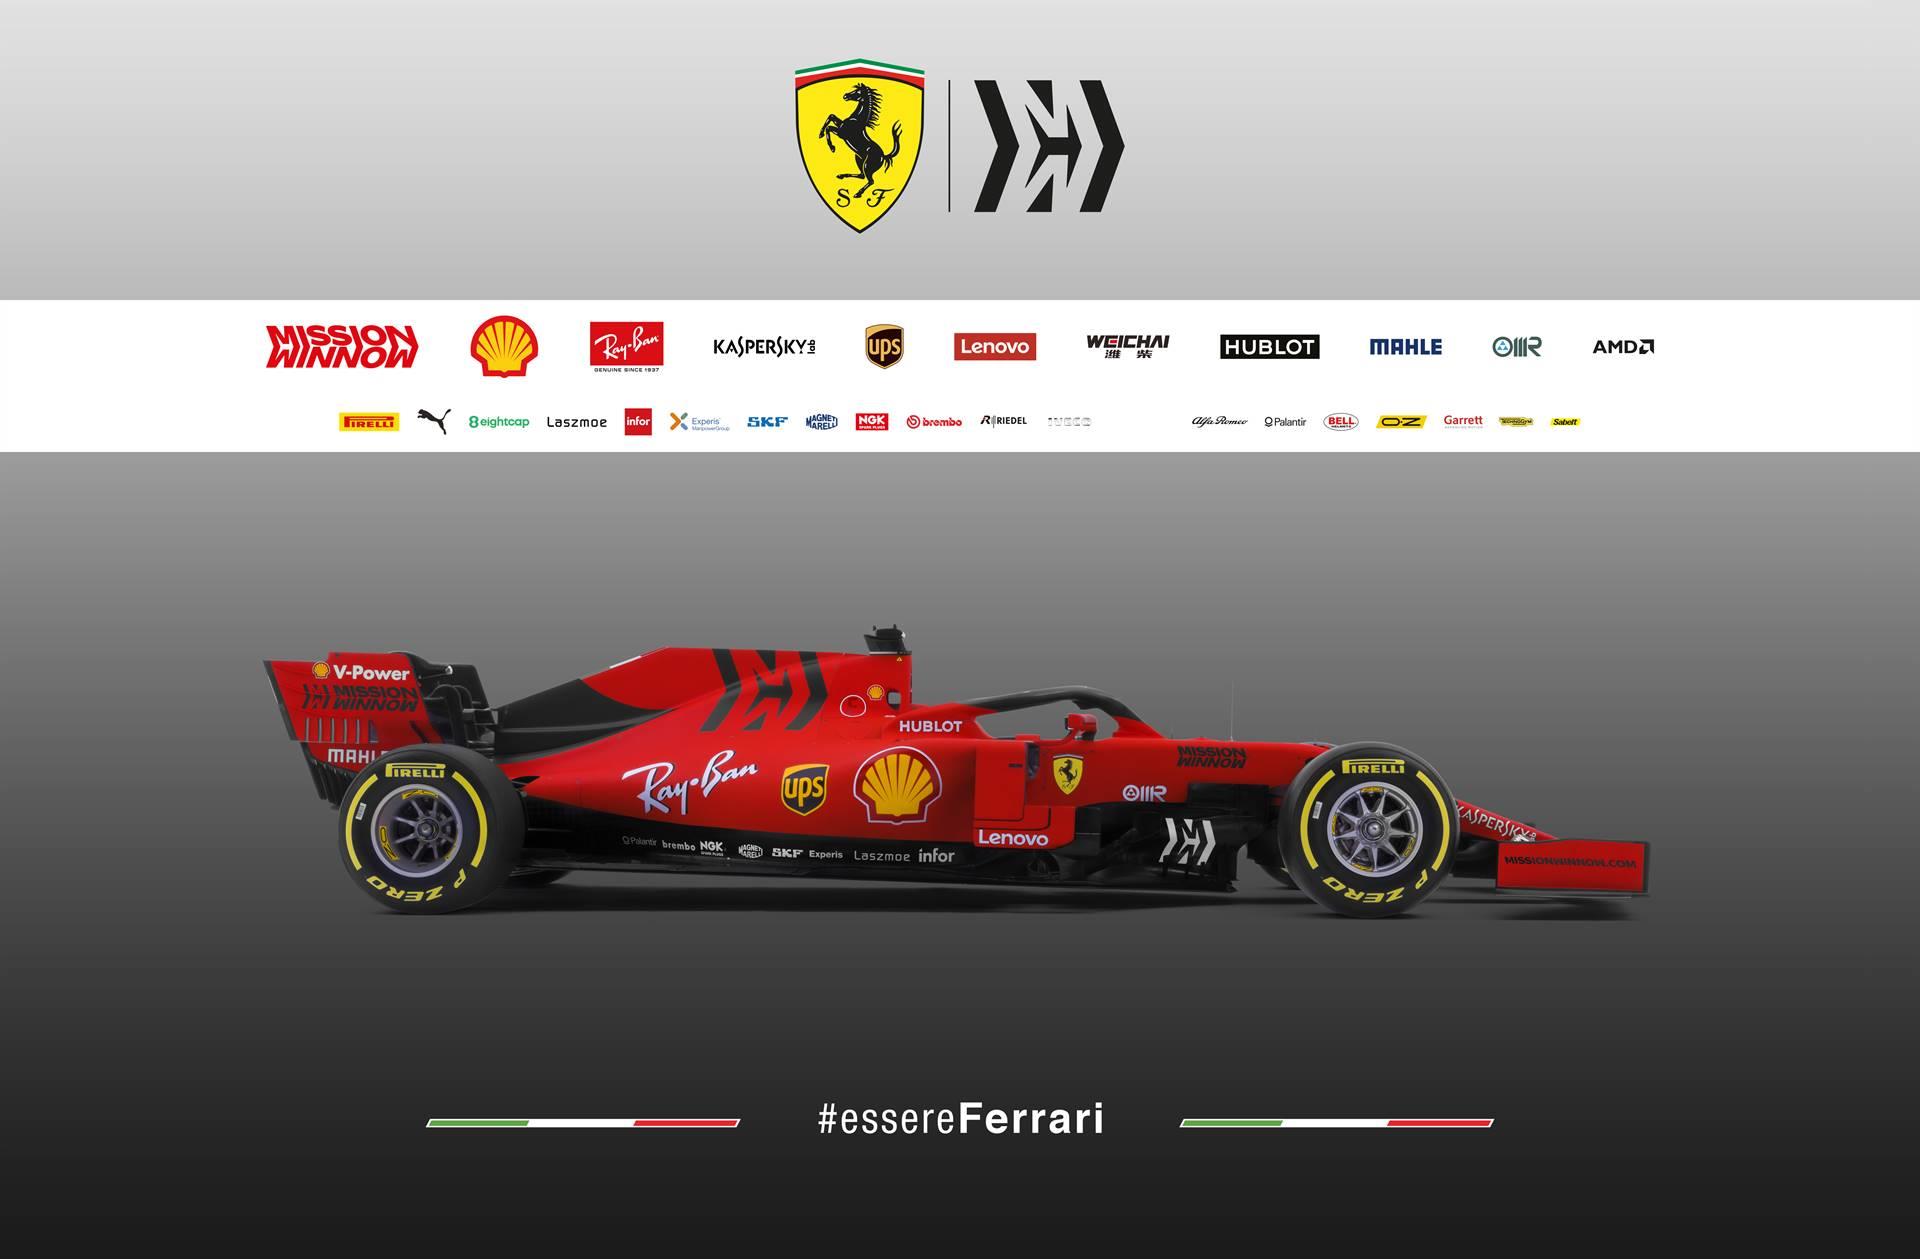 Ferrari Sf90 Wallpaper And Image Gallery